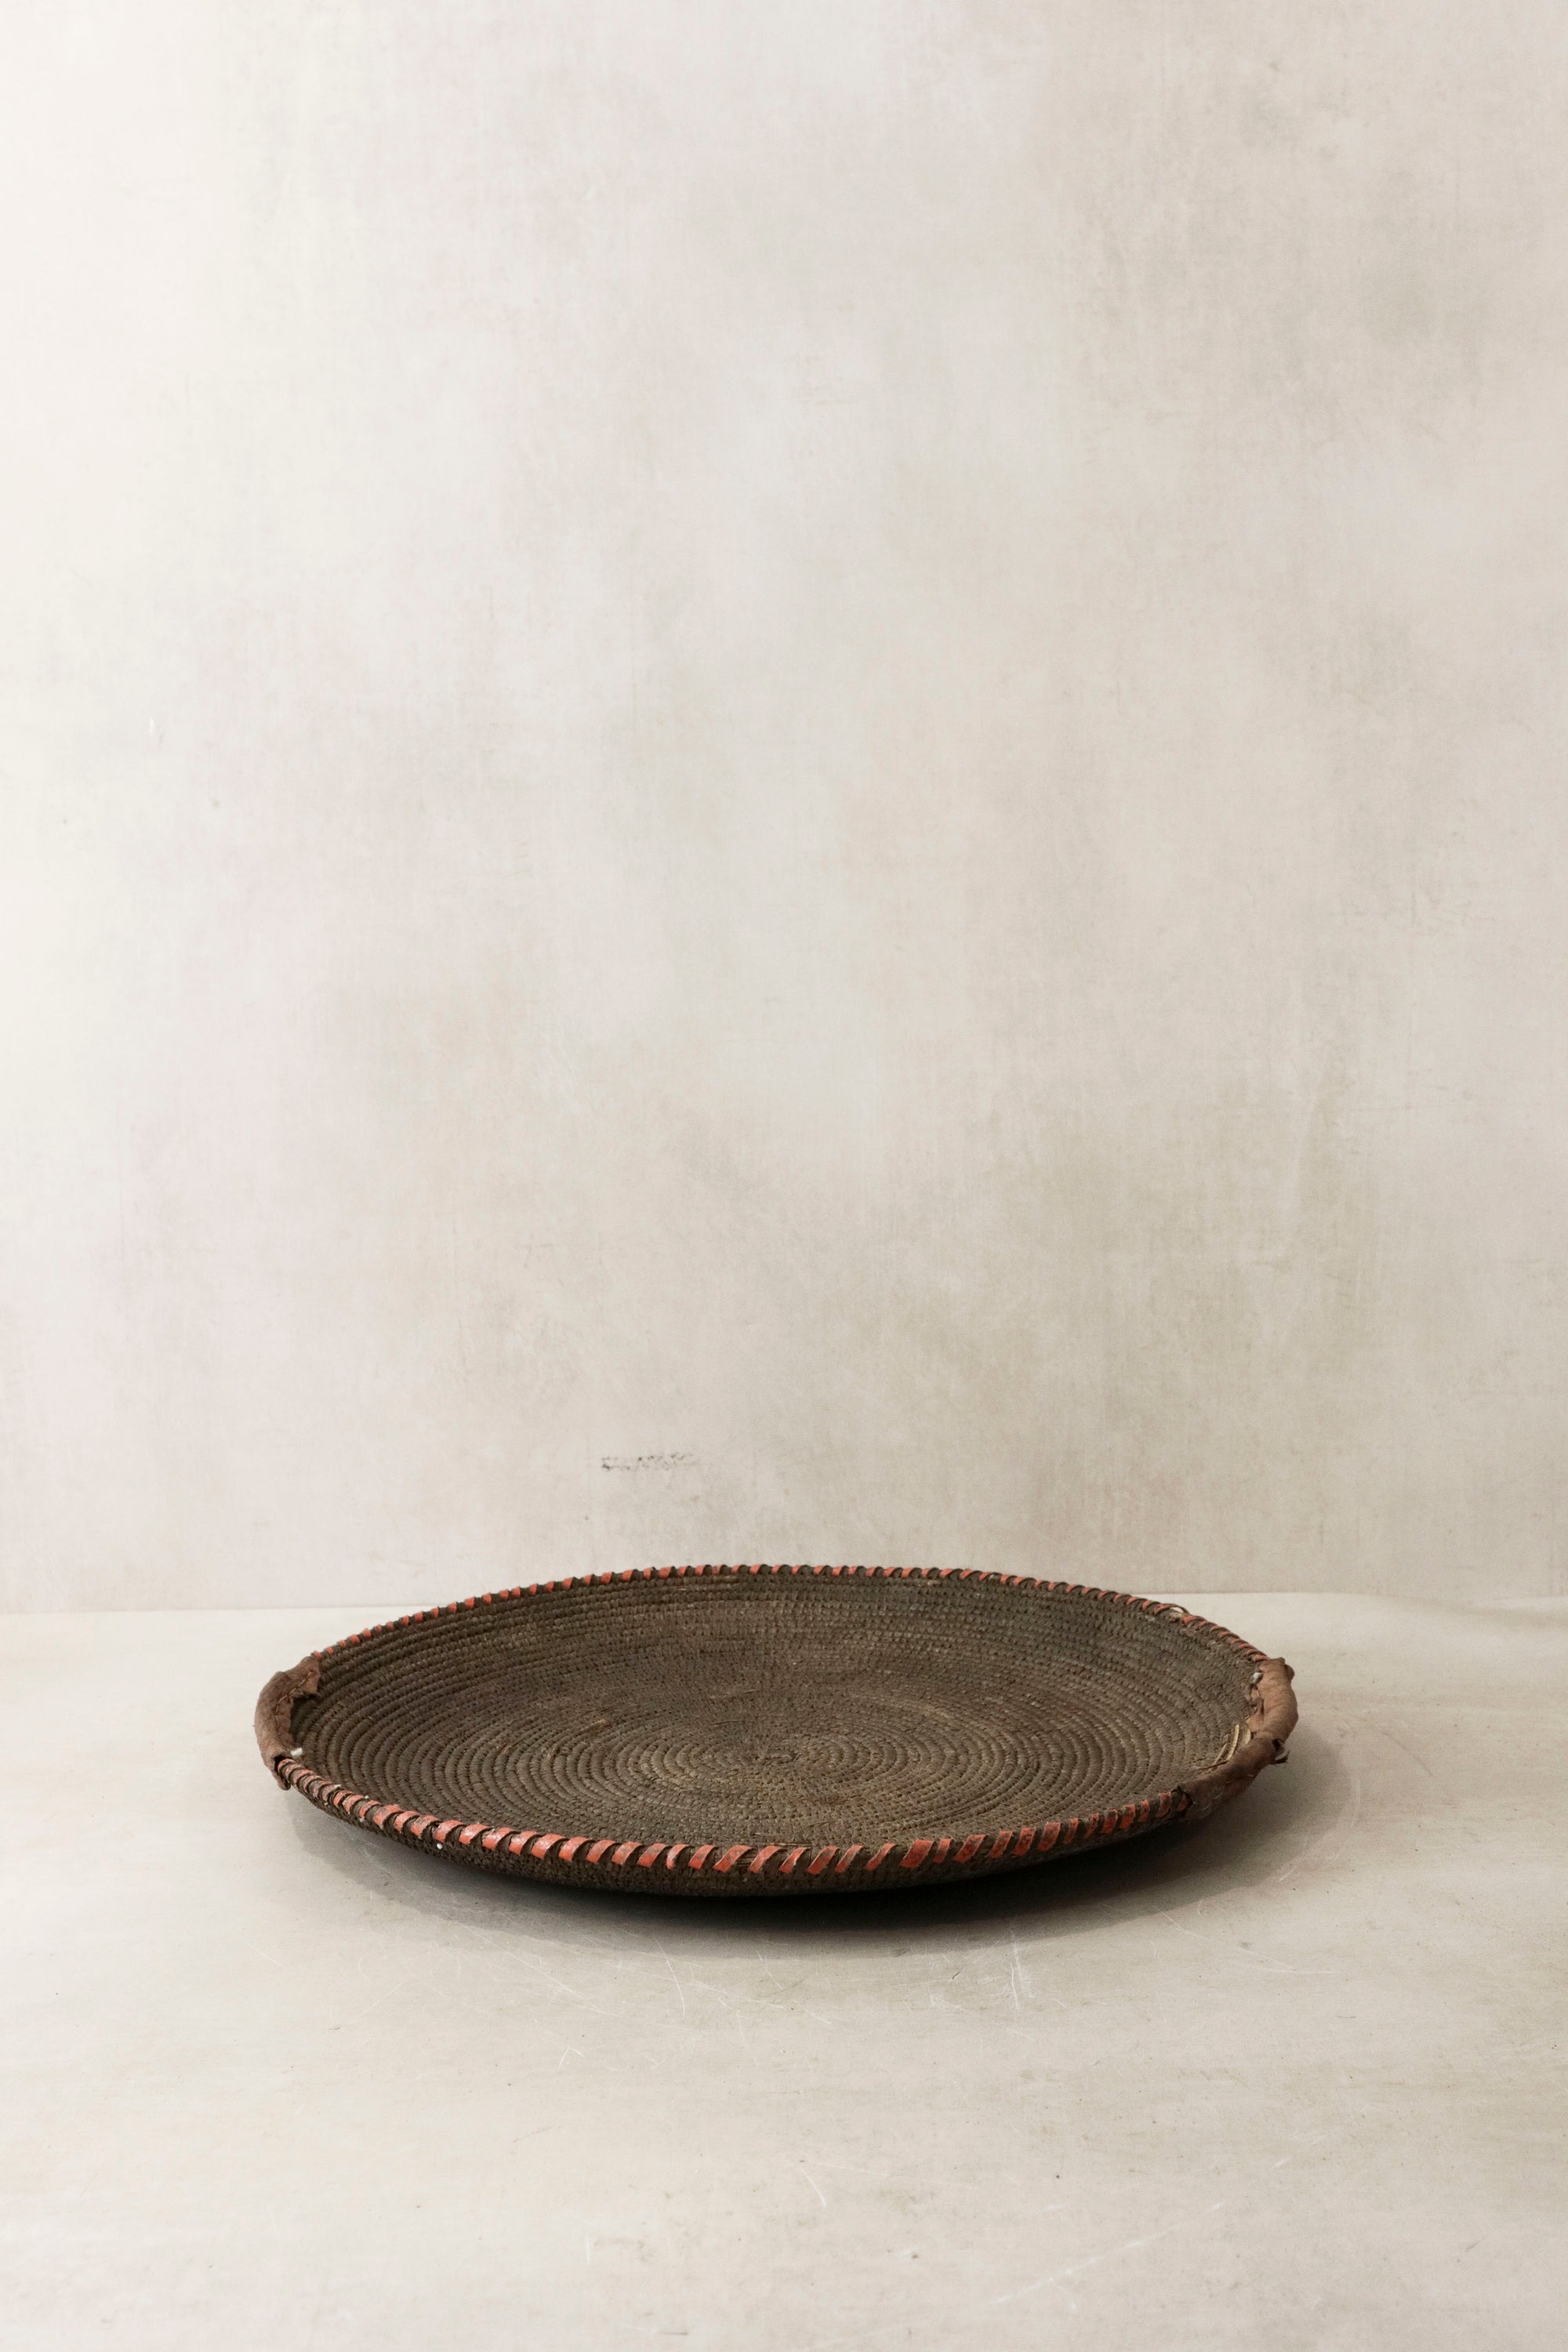 Handwoven Wall Basket - Chad - 41.10